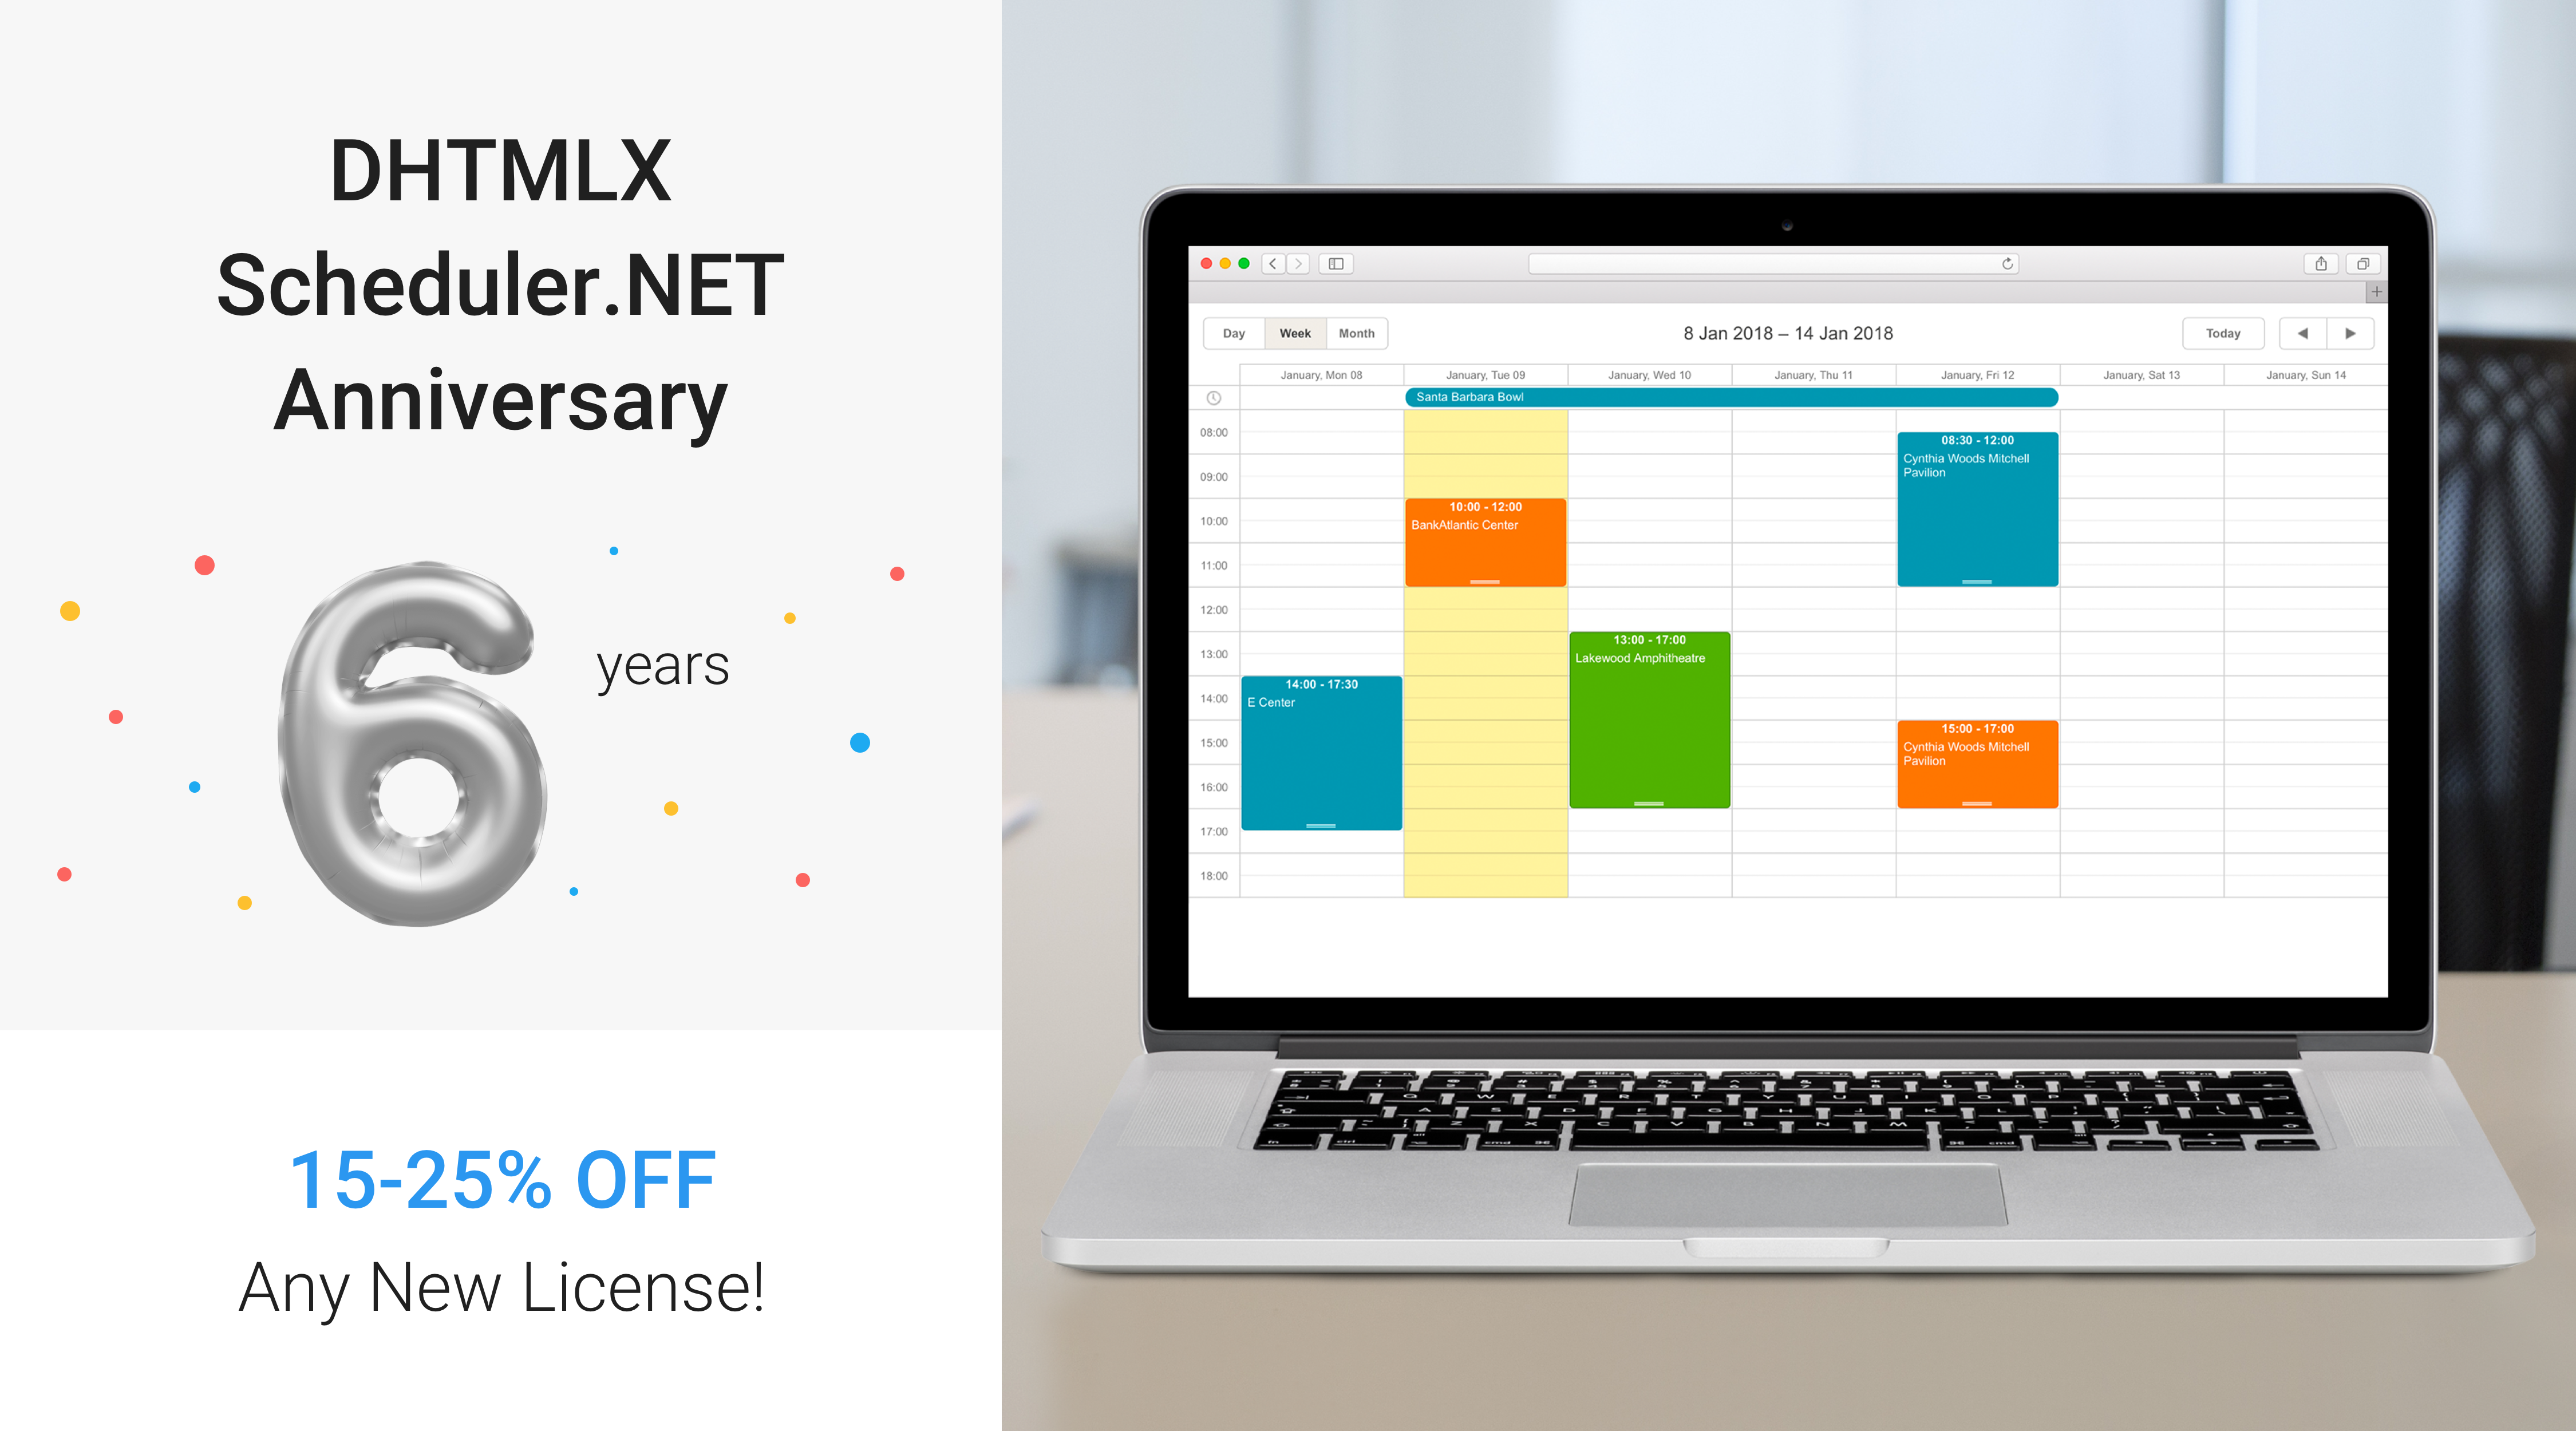 Scheduler.NET Celebrates Its 6th Anniversary